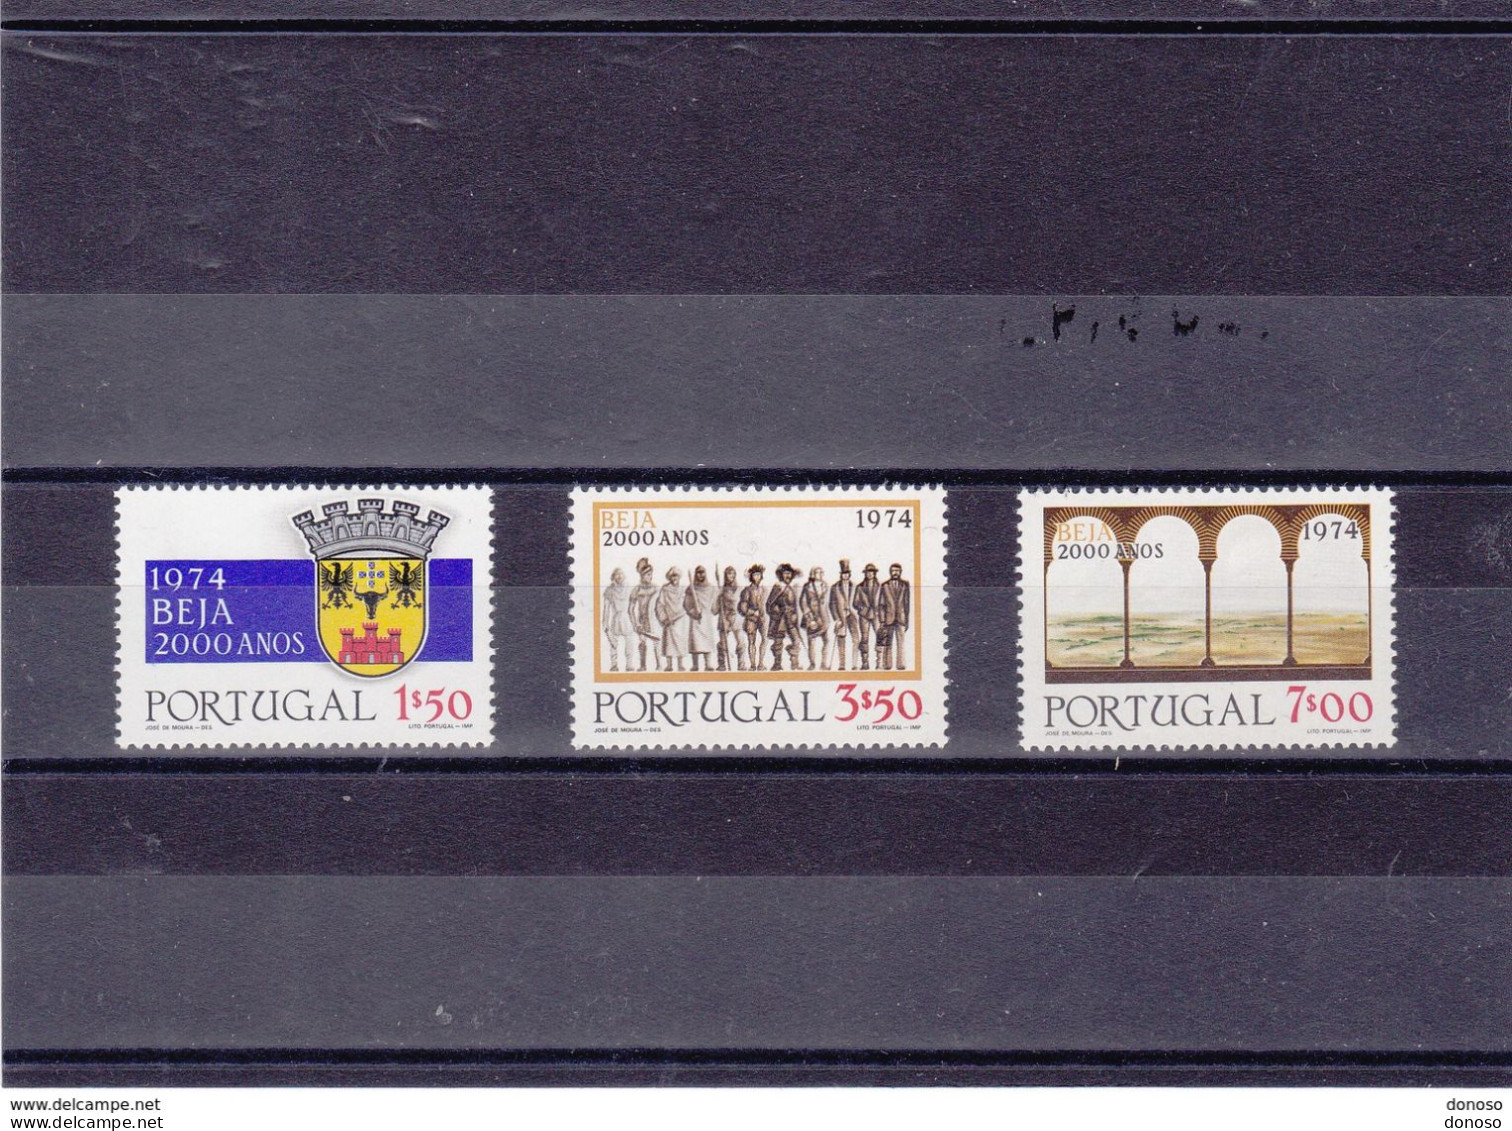 PORTUGAL 1974 VILLE DE BEJA Yvert 1240-1242, Michel 1260-1262 NEUF** MNH Cote 6,50 Euros - Unused Stamps